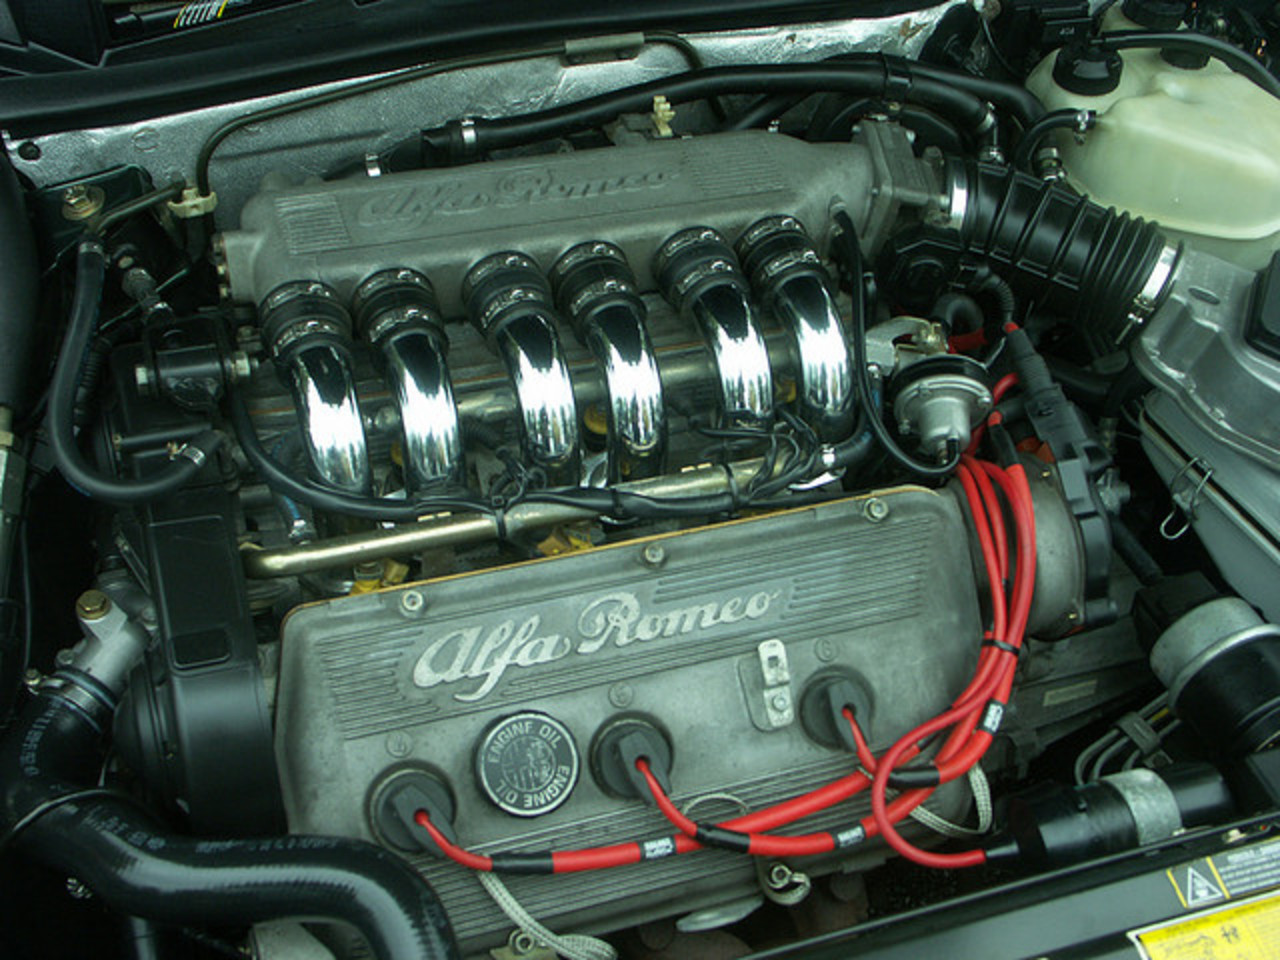 Alfa Romeo 164 Engine | Flickr - Photo Sharing!